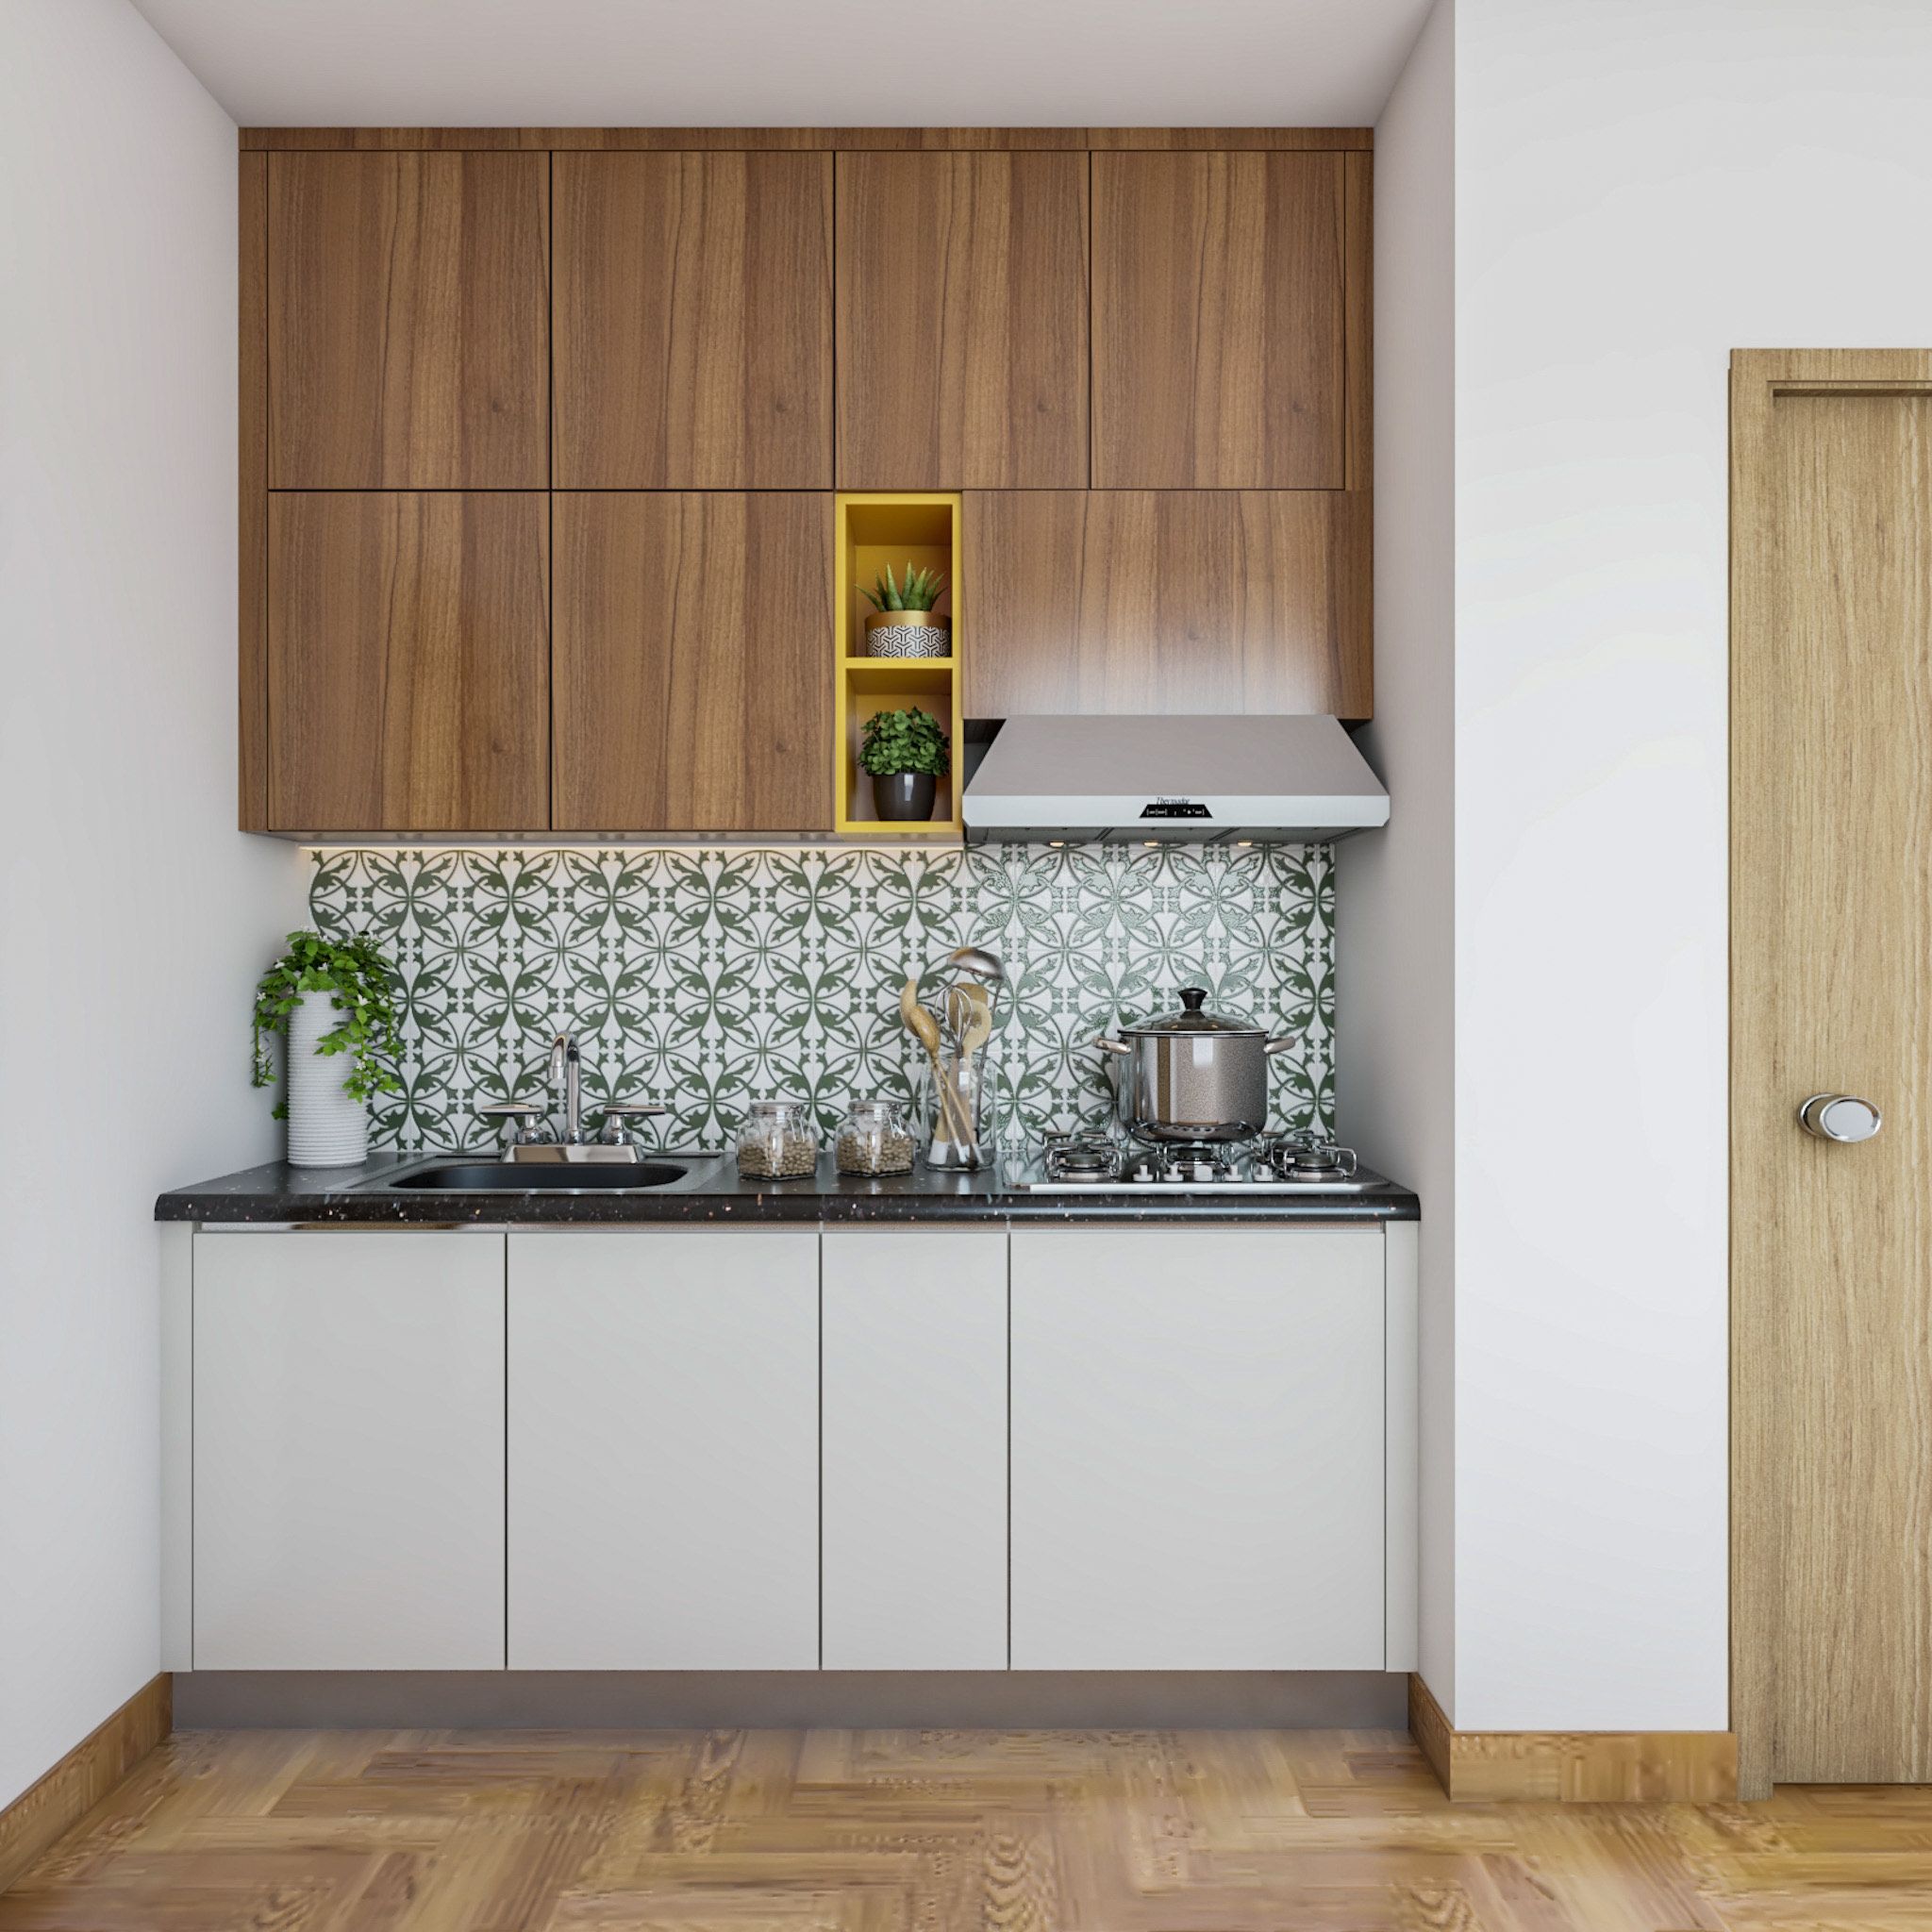 Scandinavian Design For Kitchens With Patterned Dado Tiles